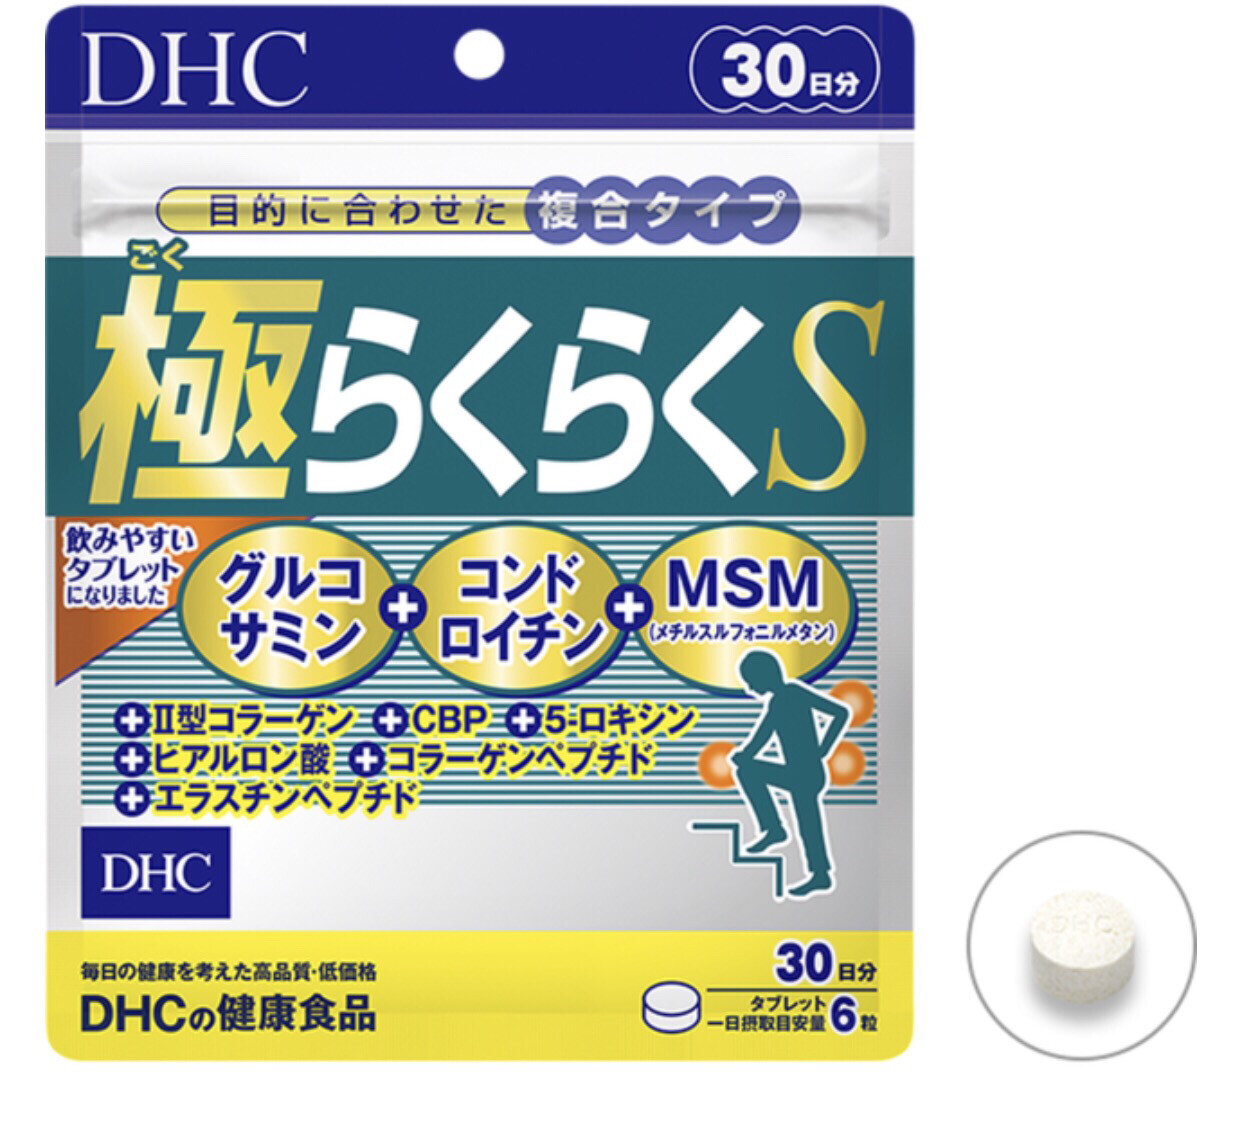 DHC Rakuraku S "С Легкостью"